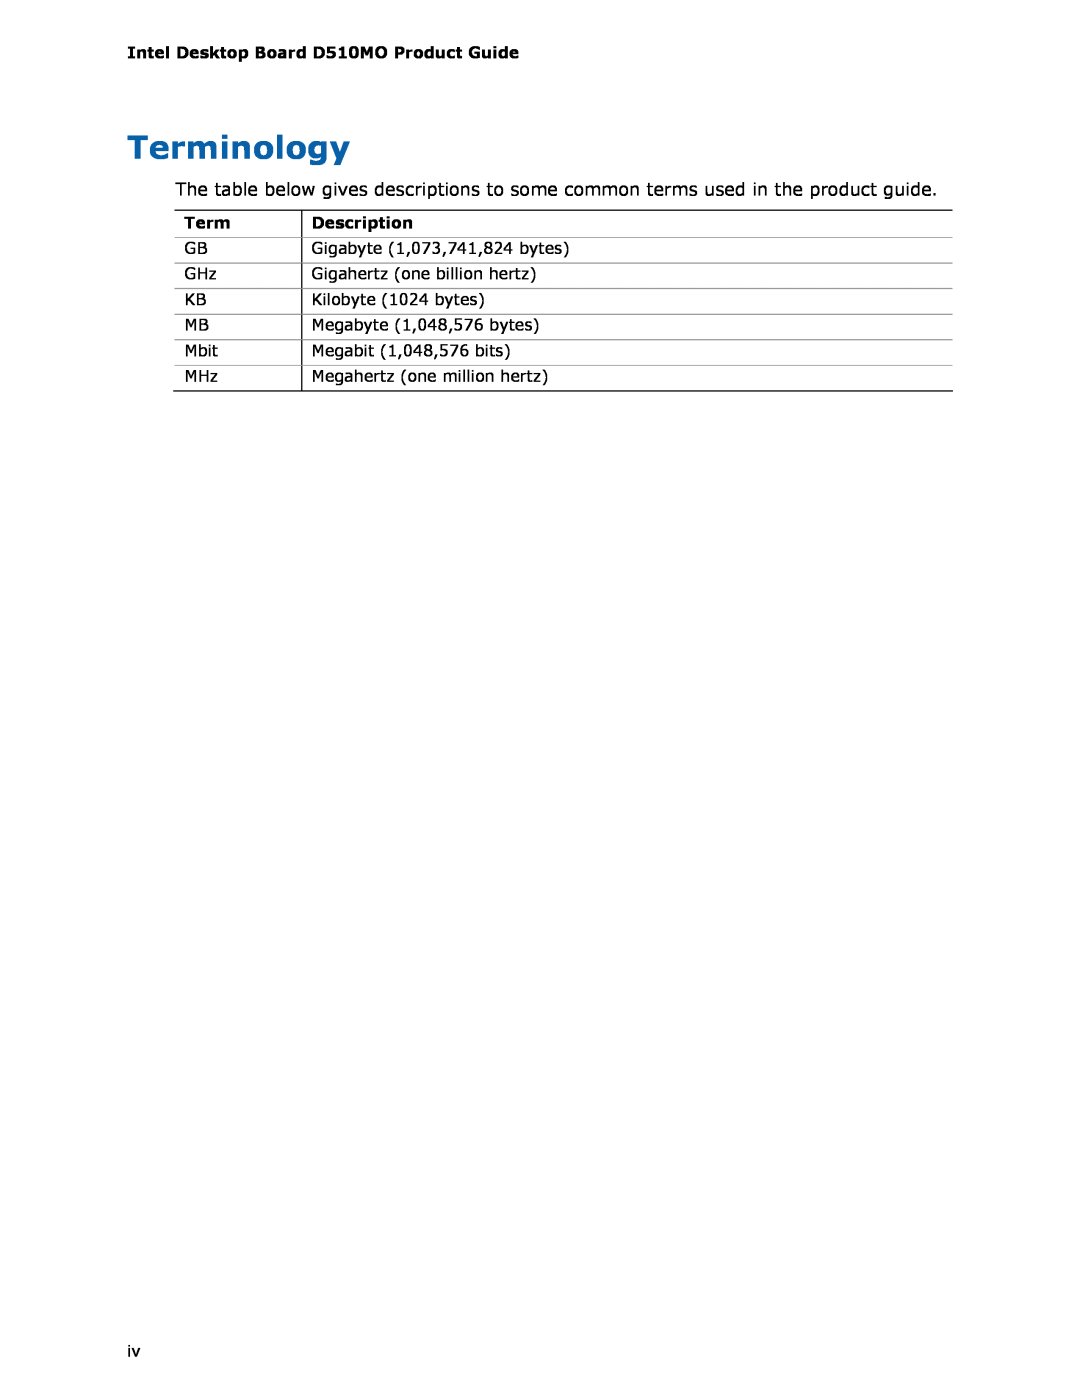 Intel manual Terminology, Intel Desktop Board D510MO Product Guide, Description 